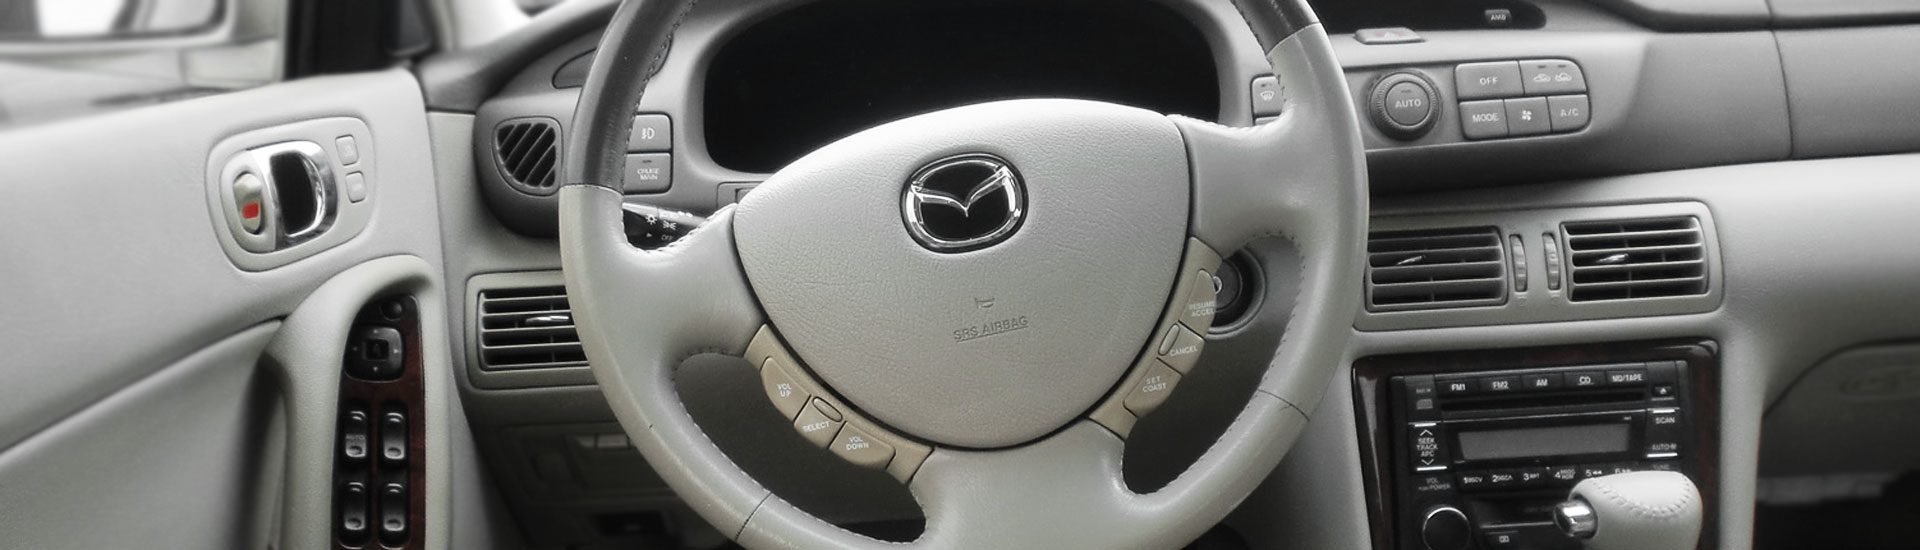 Mazda Millenia Custom Dash Kits